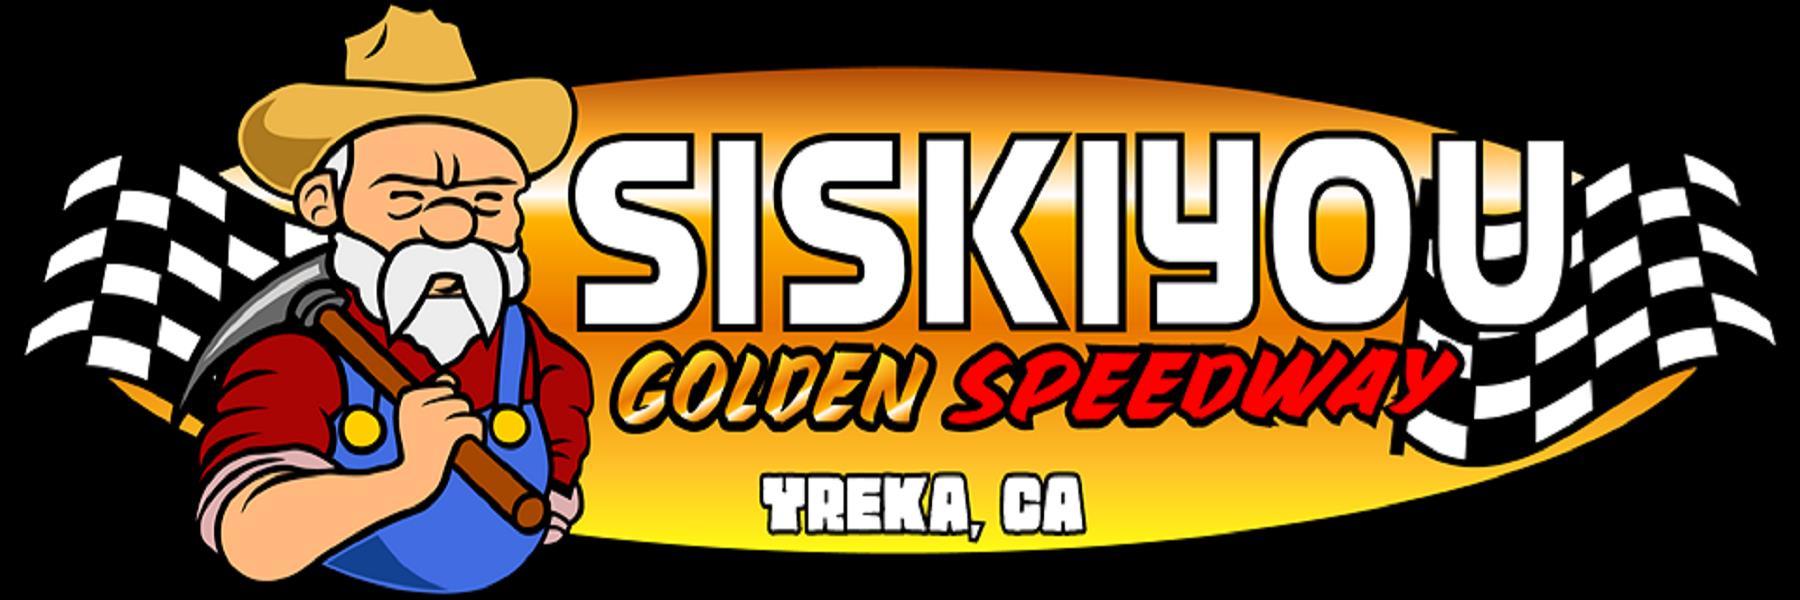 5/29/2022 - Siskiyou Golden Speedway